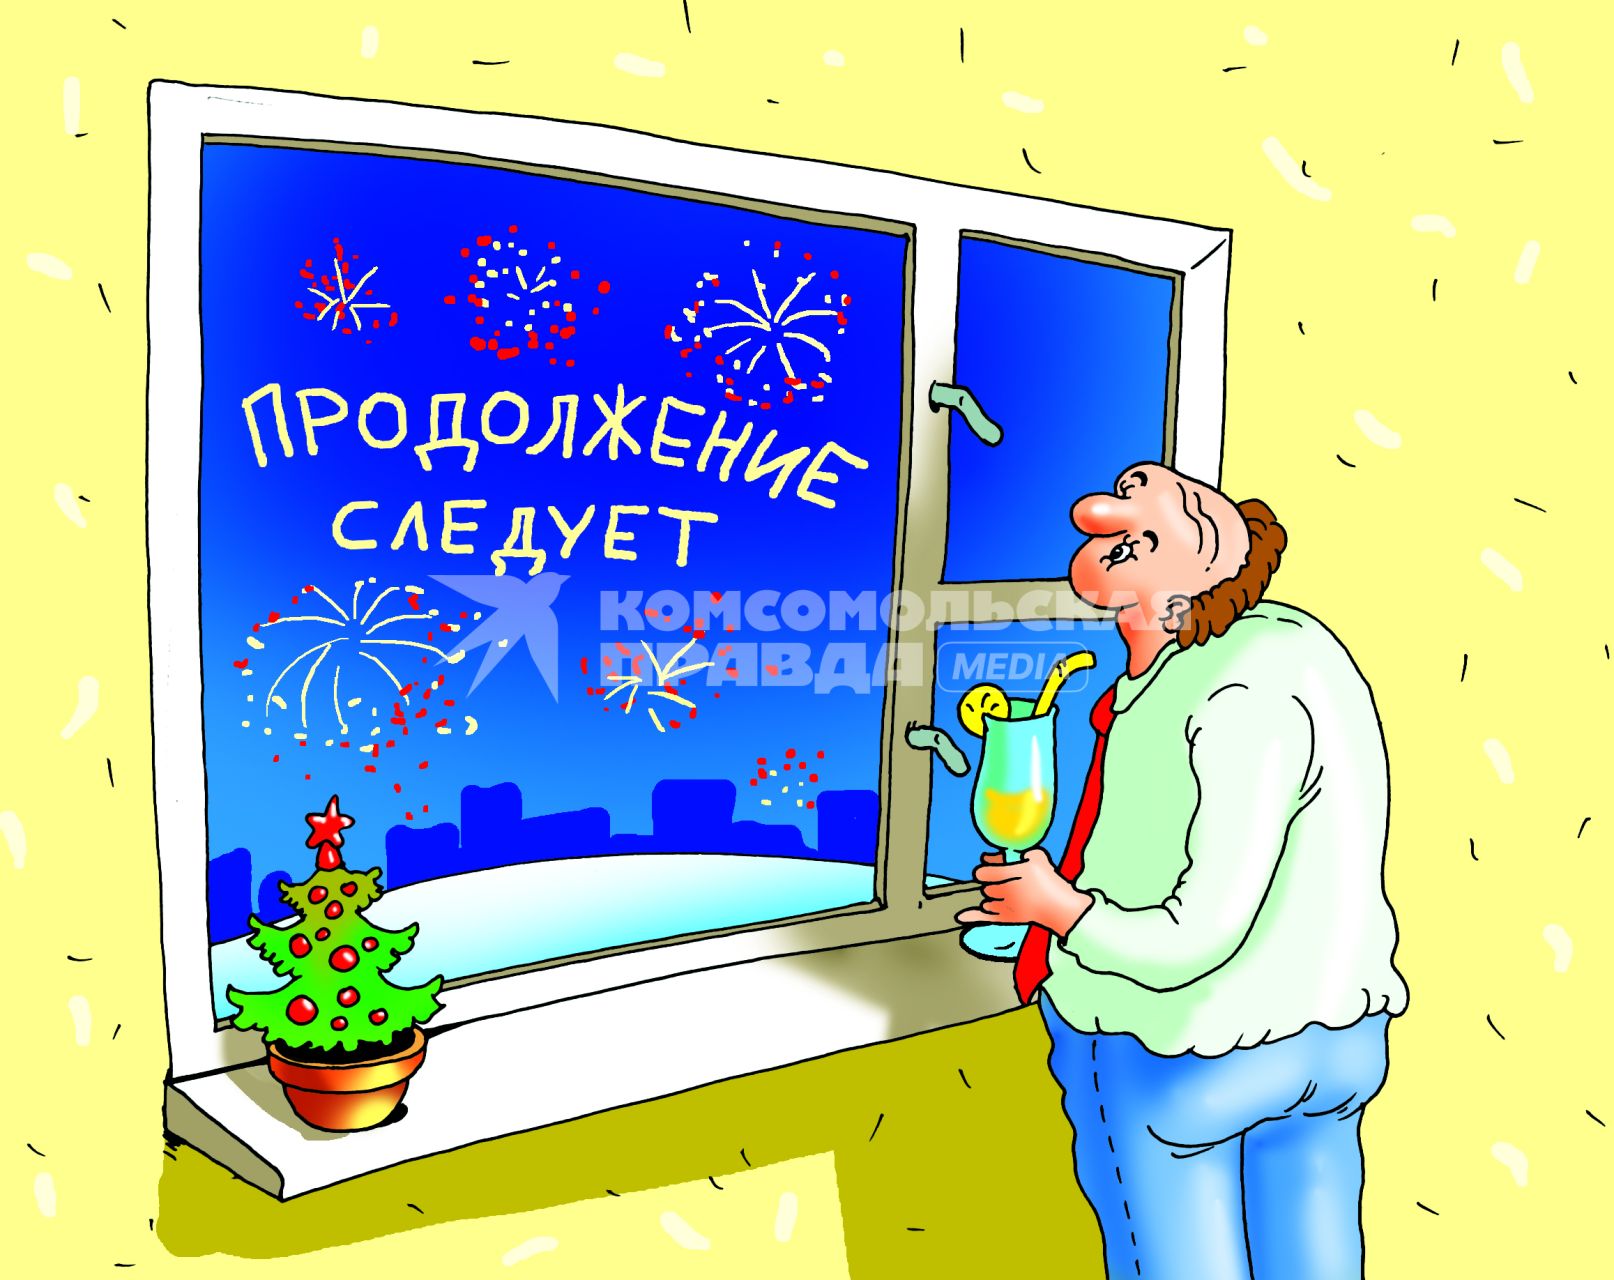 Карикатура на тему Нового года.